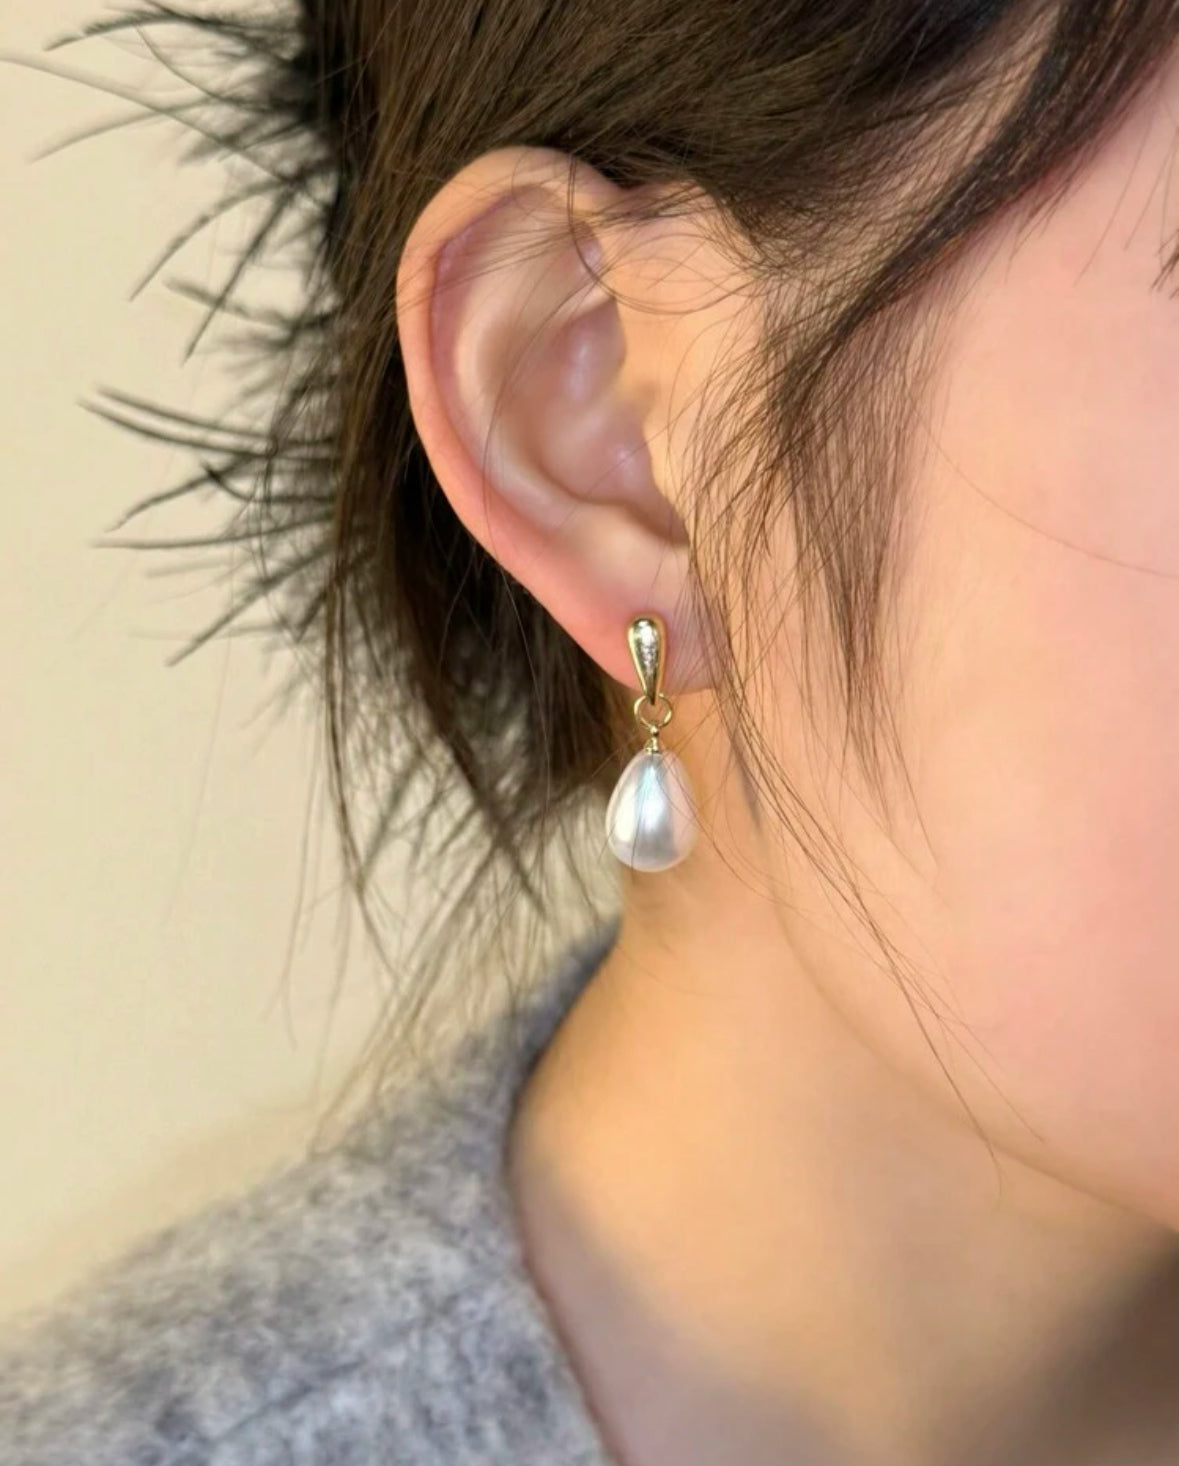 Elegant design pearl drop earrings